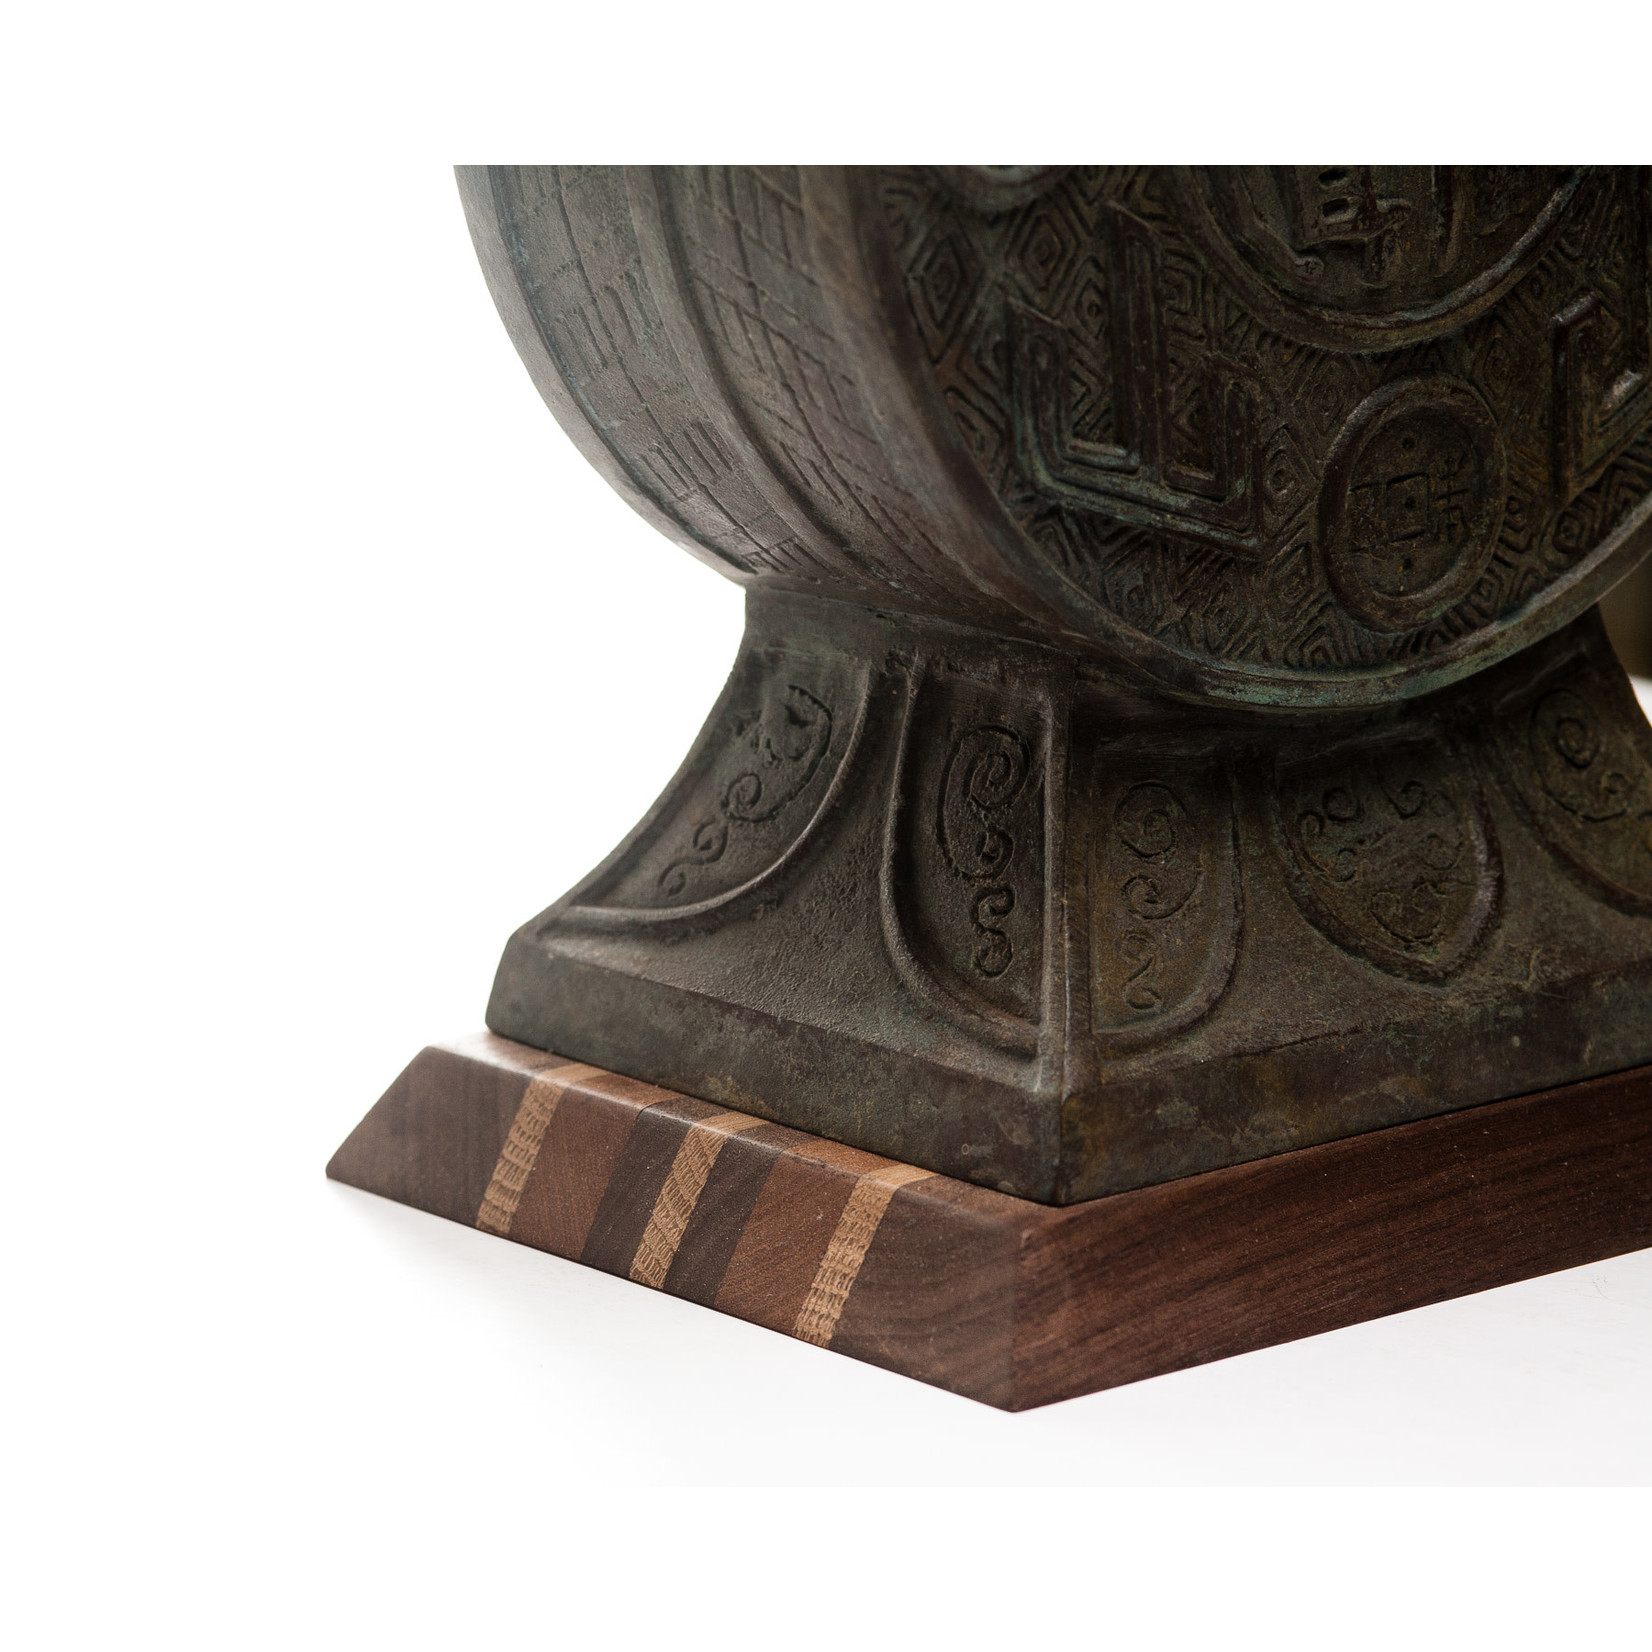 Lawrence & Scott Emersyn Table Lamp in Archaic Bronze